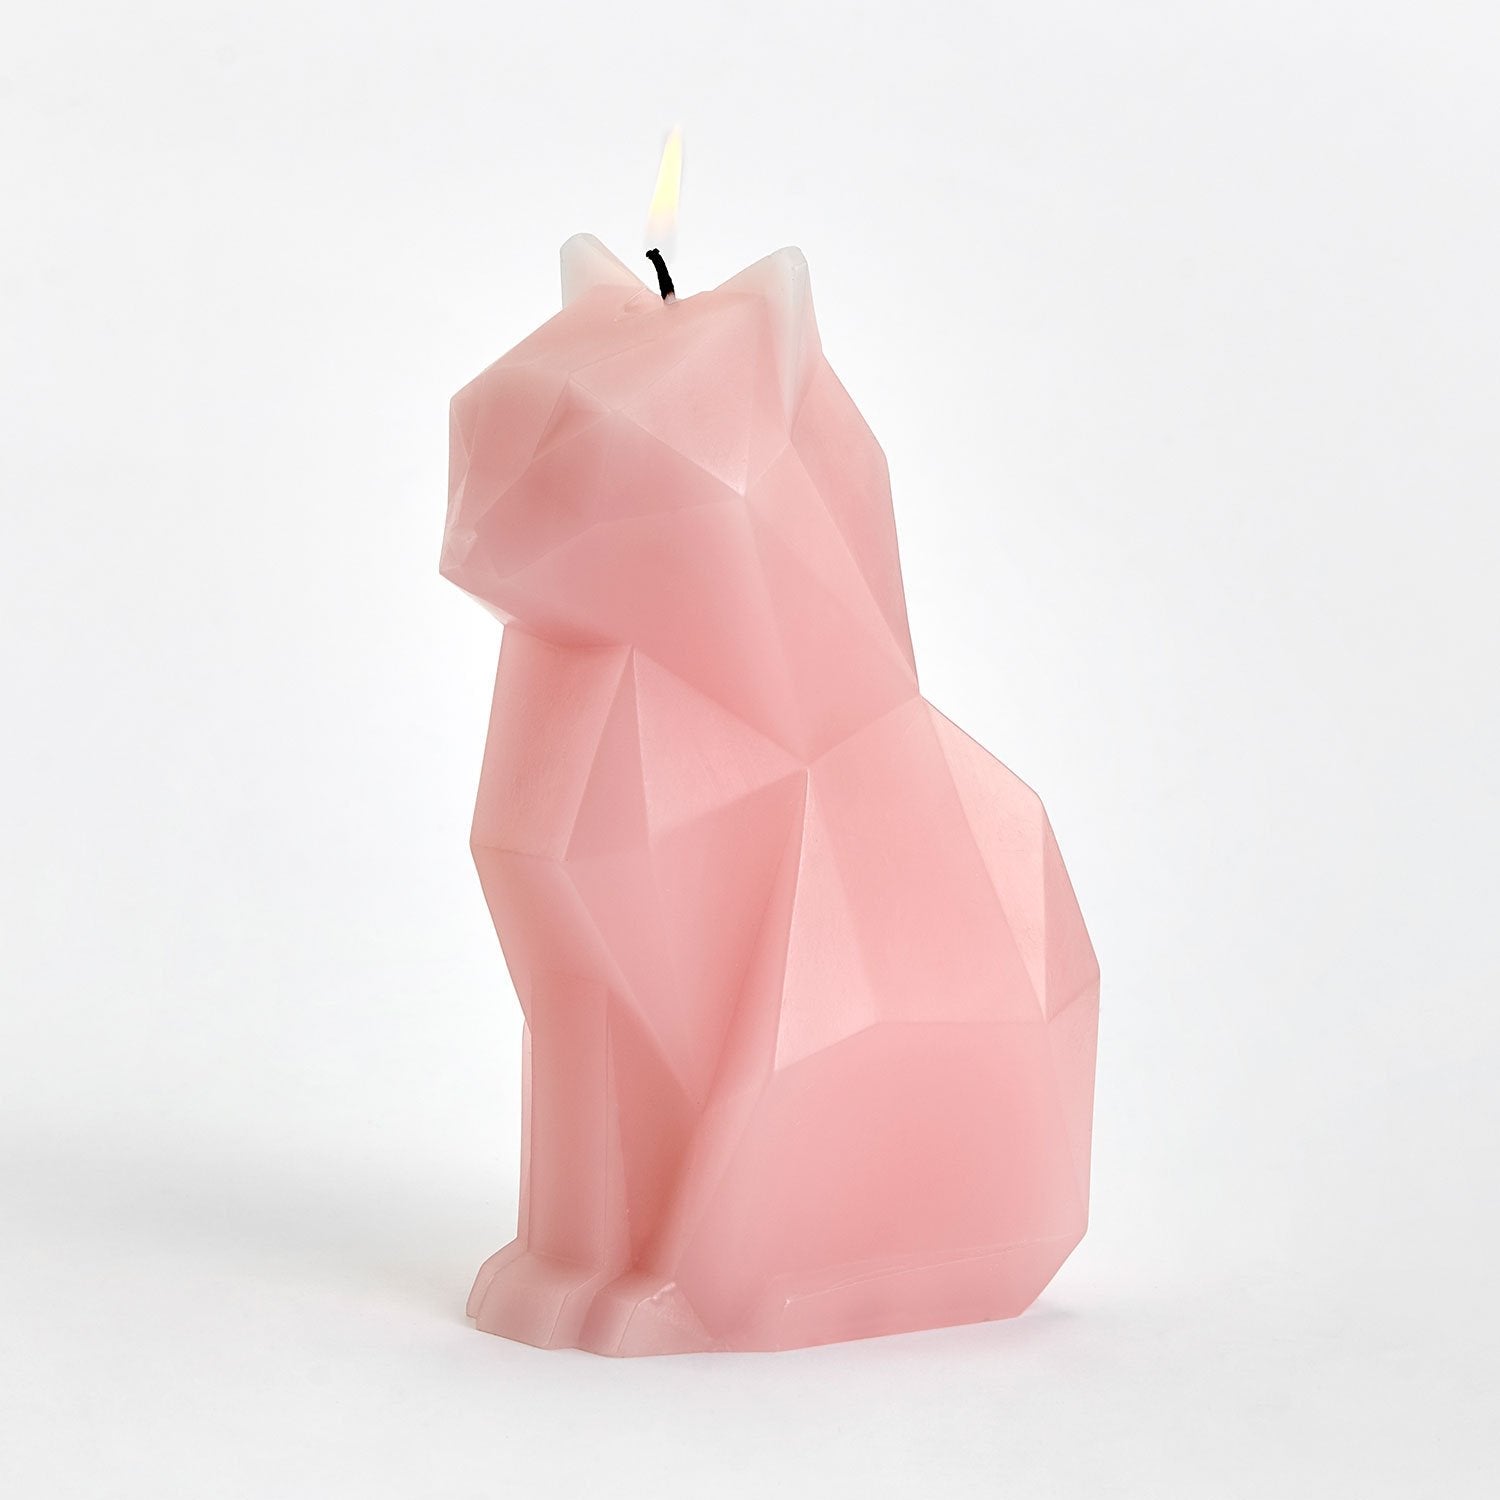 brennende Kerze in Form einer rosa Katze